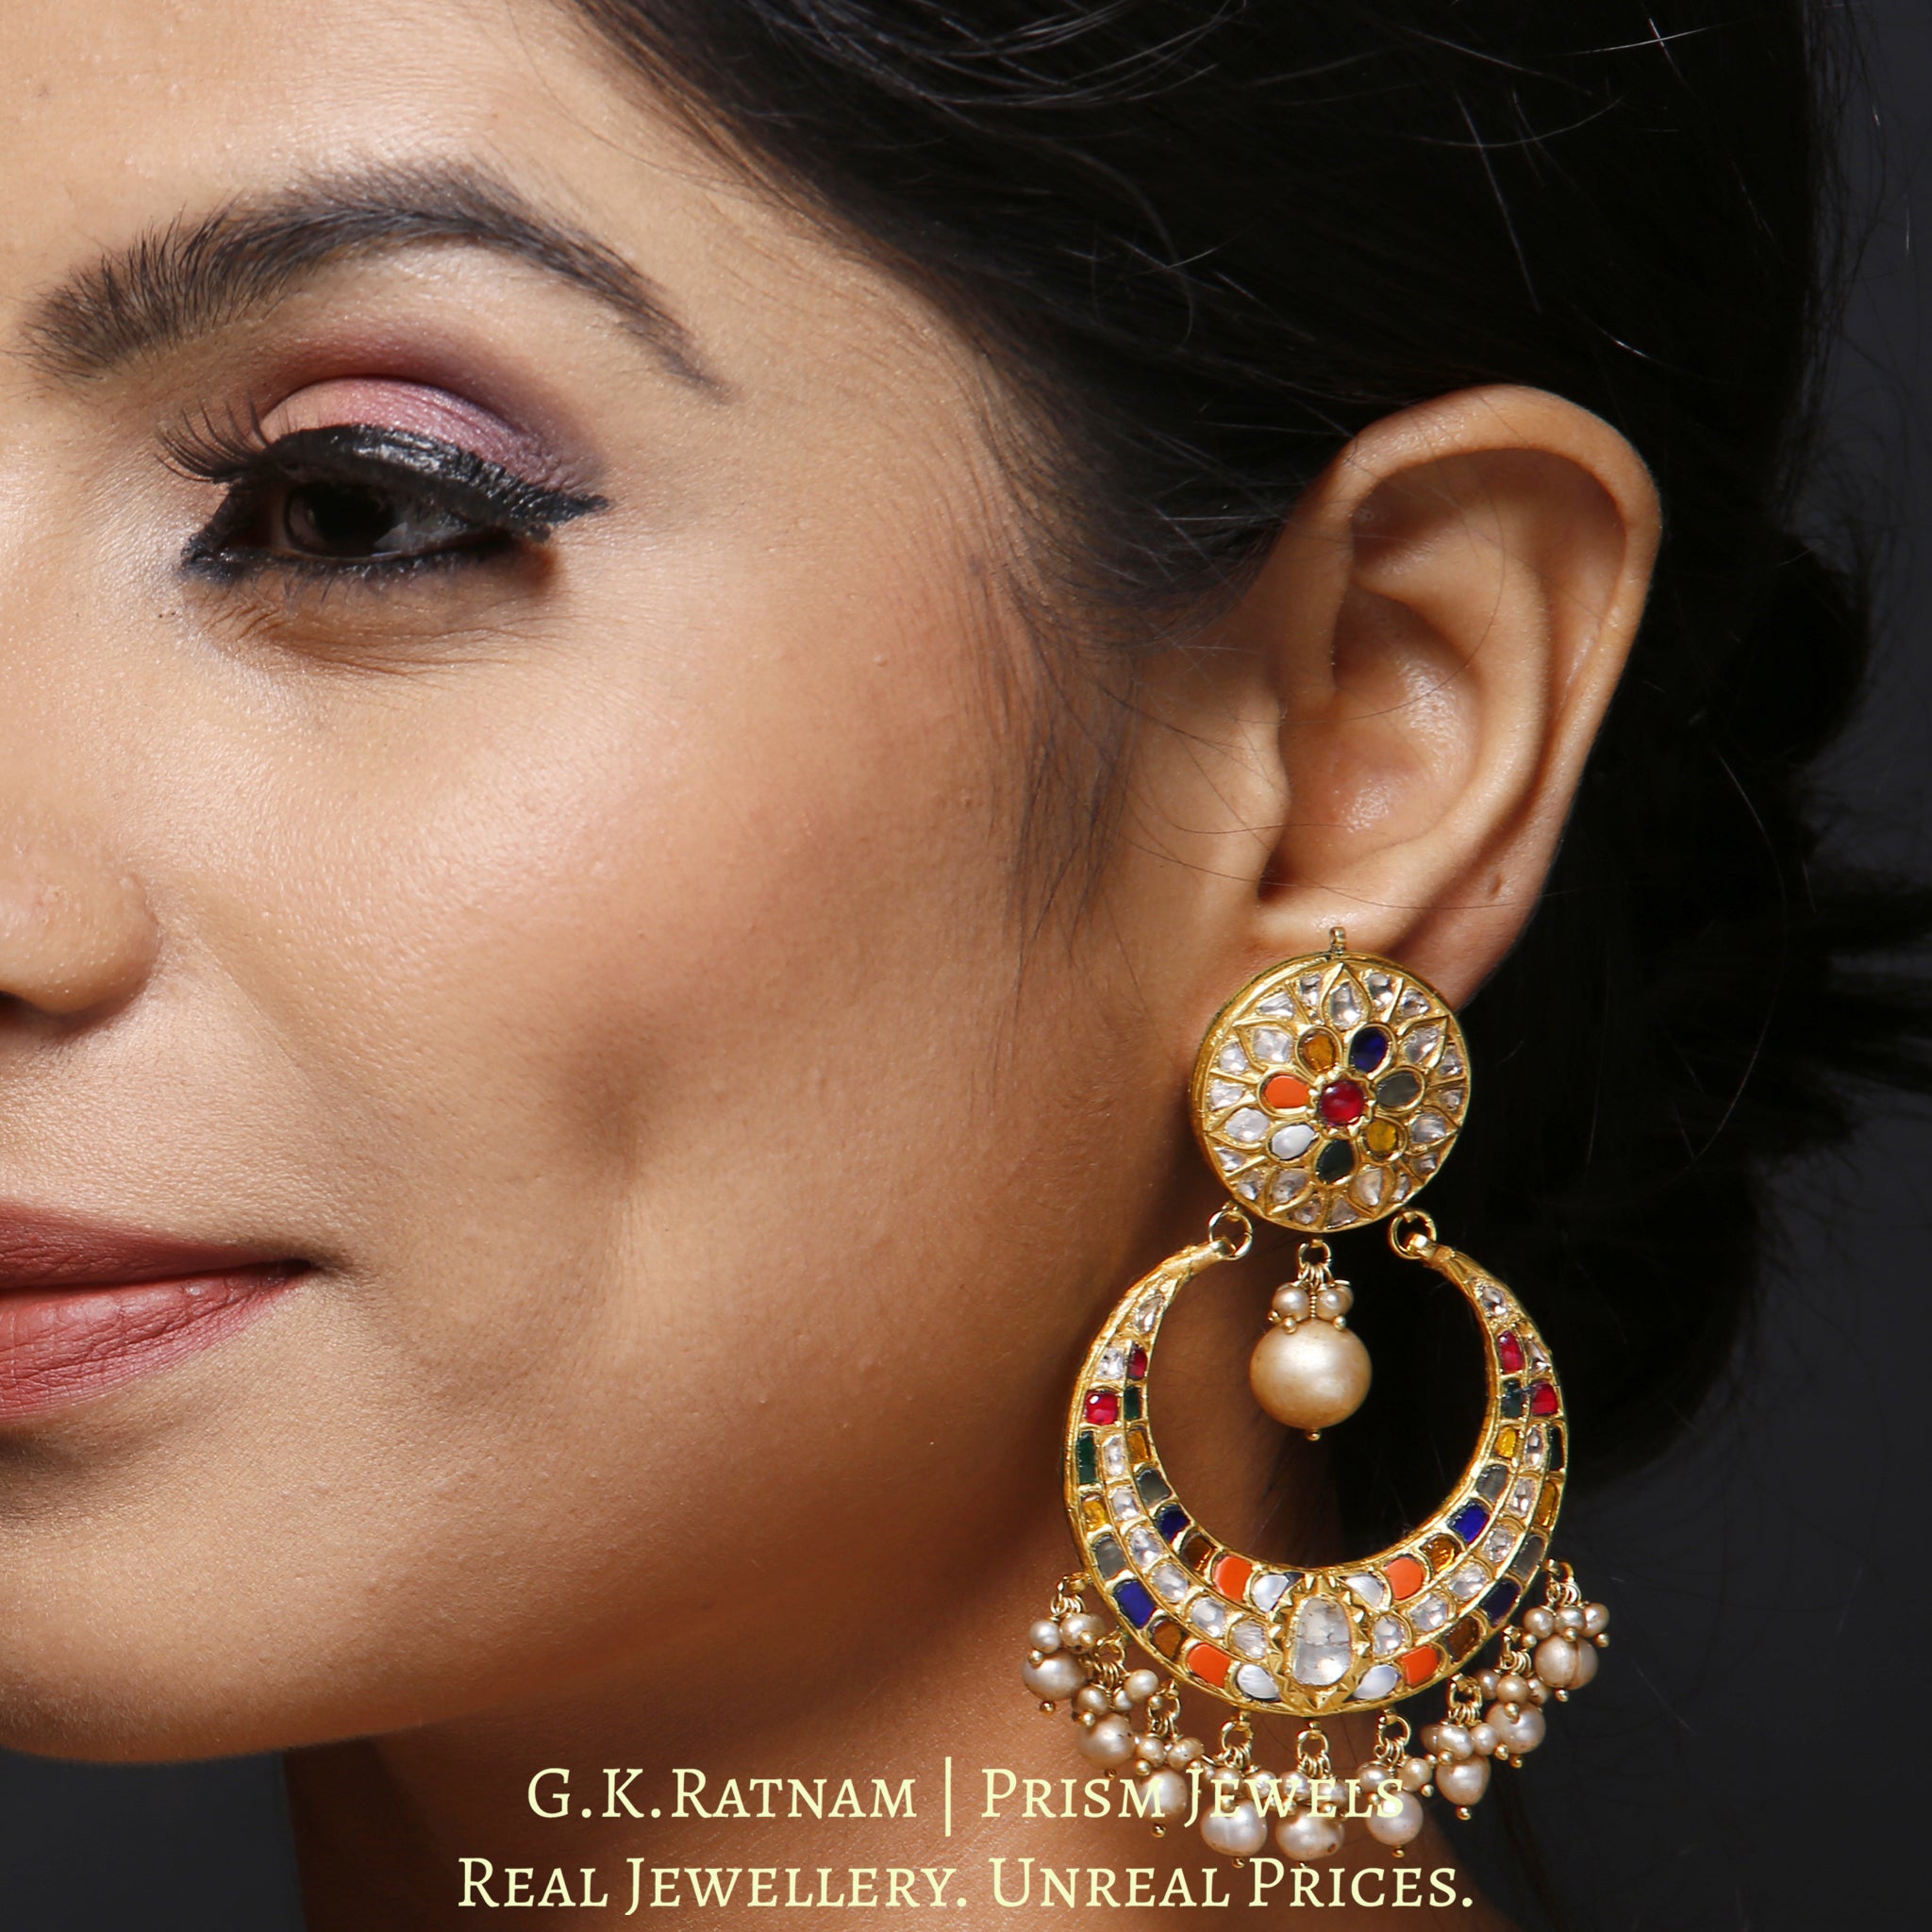 23k Gold and Diamond Polki Navratna Chand Bali Earring Pair with basra-grade hyderabadi pearls